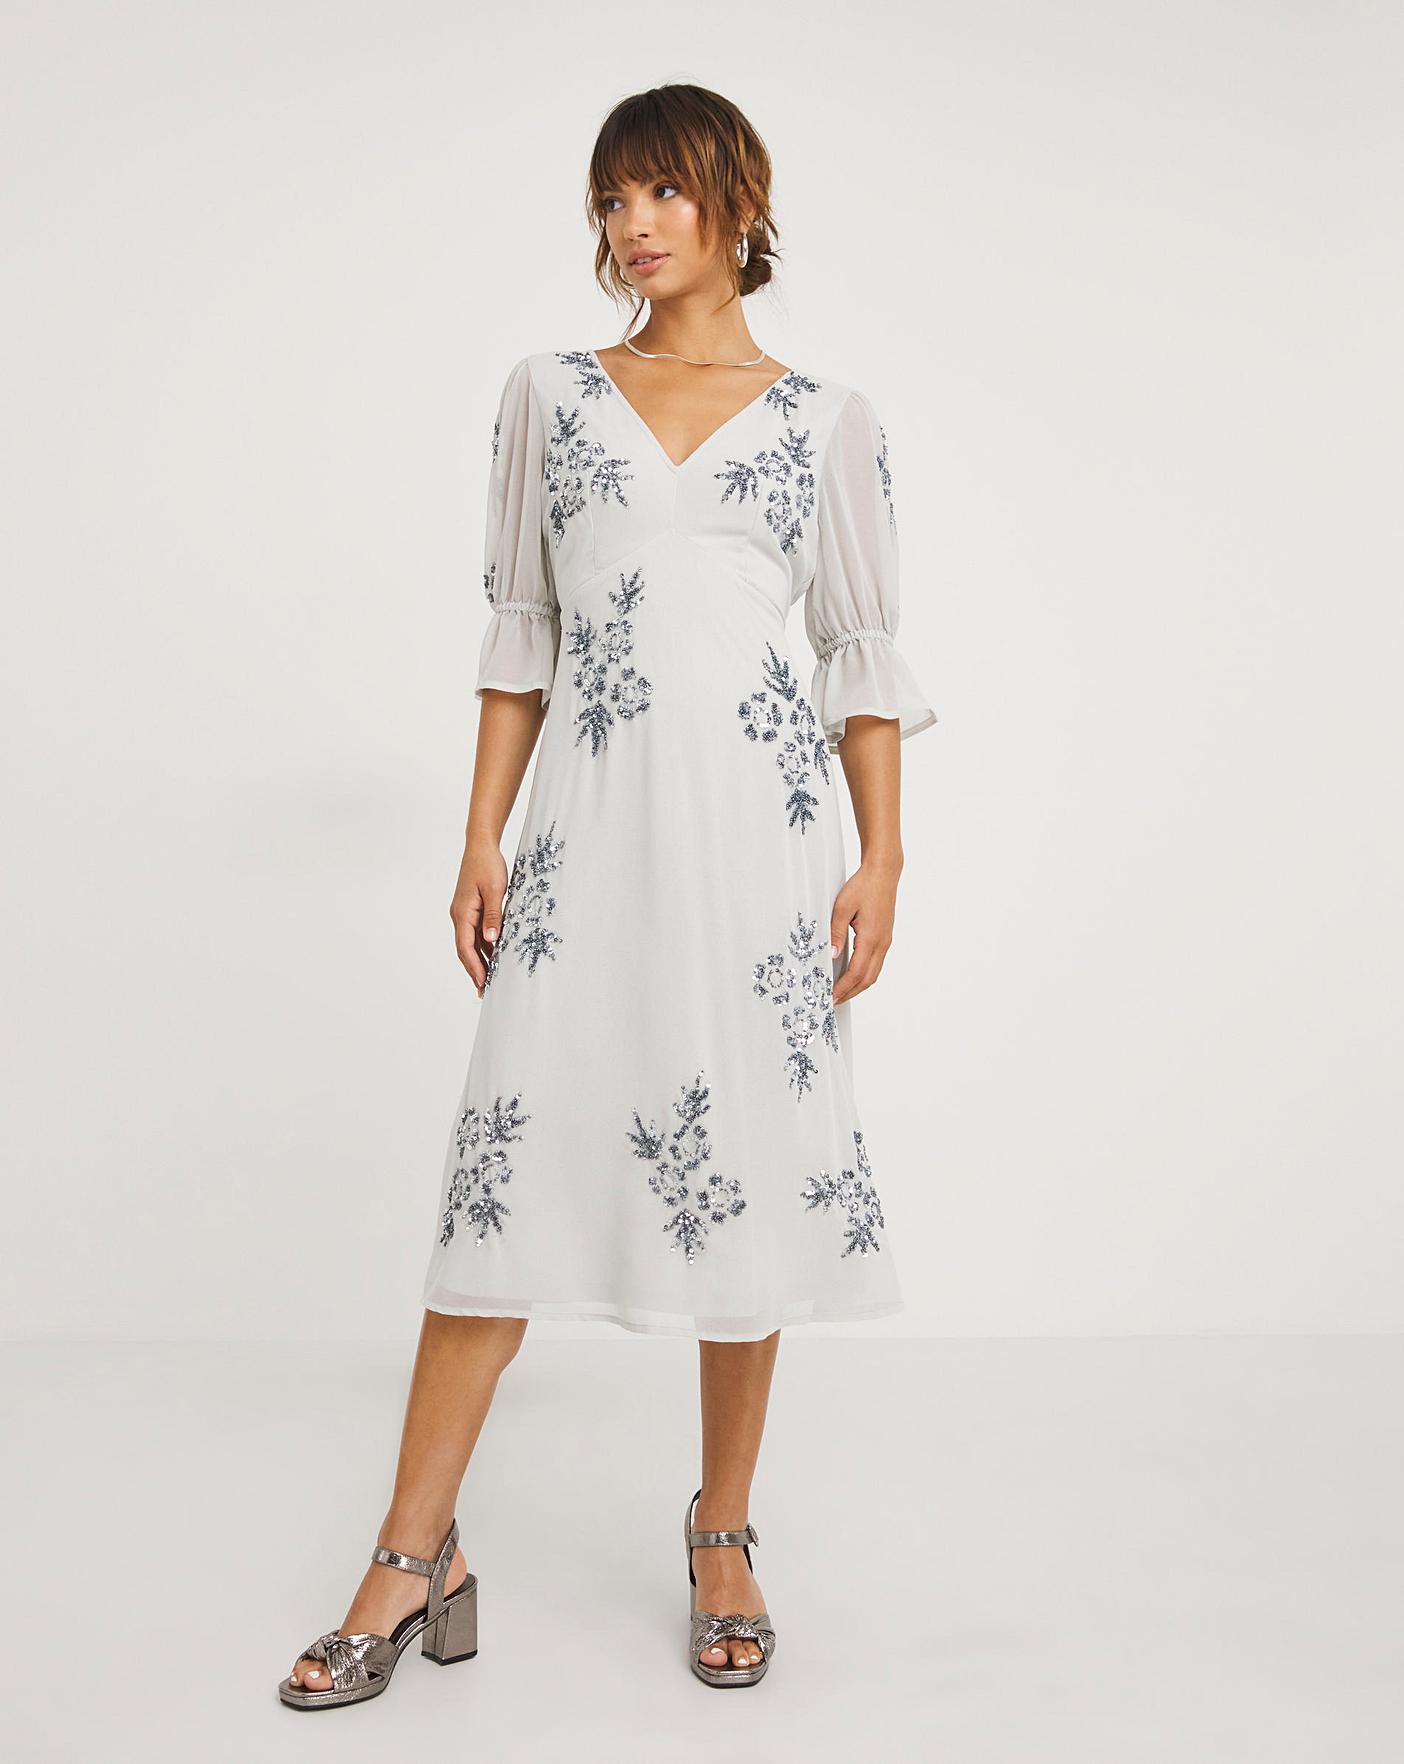 Joanna Hope Floral Sequin Midi Dress | J D Williams